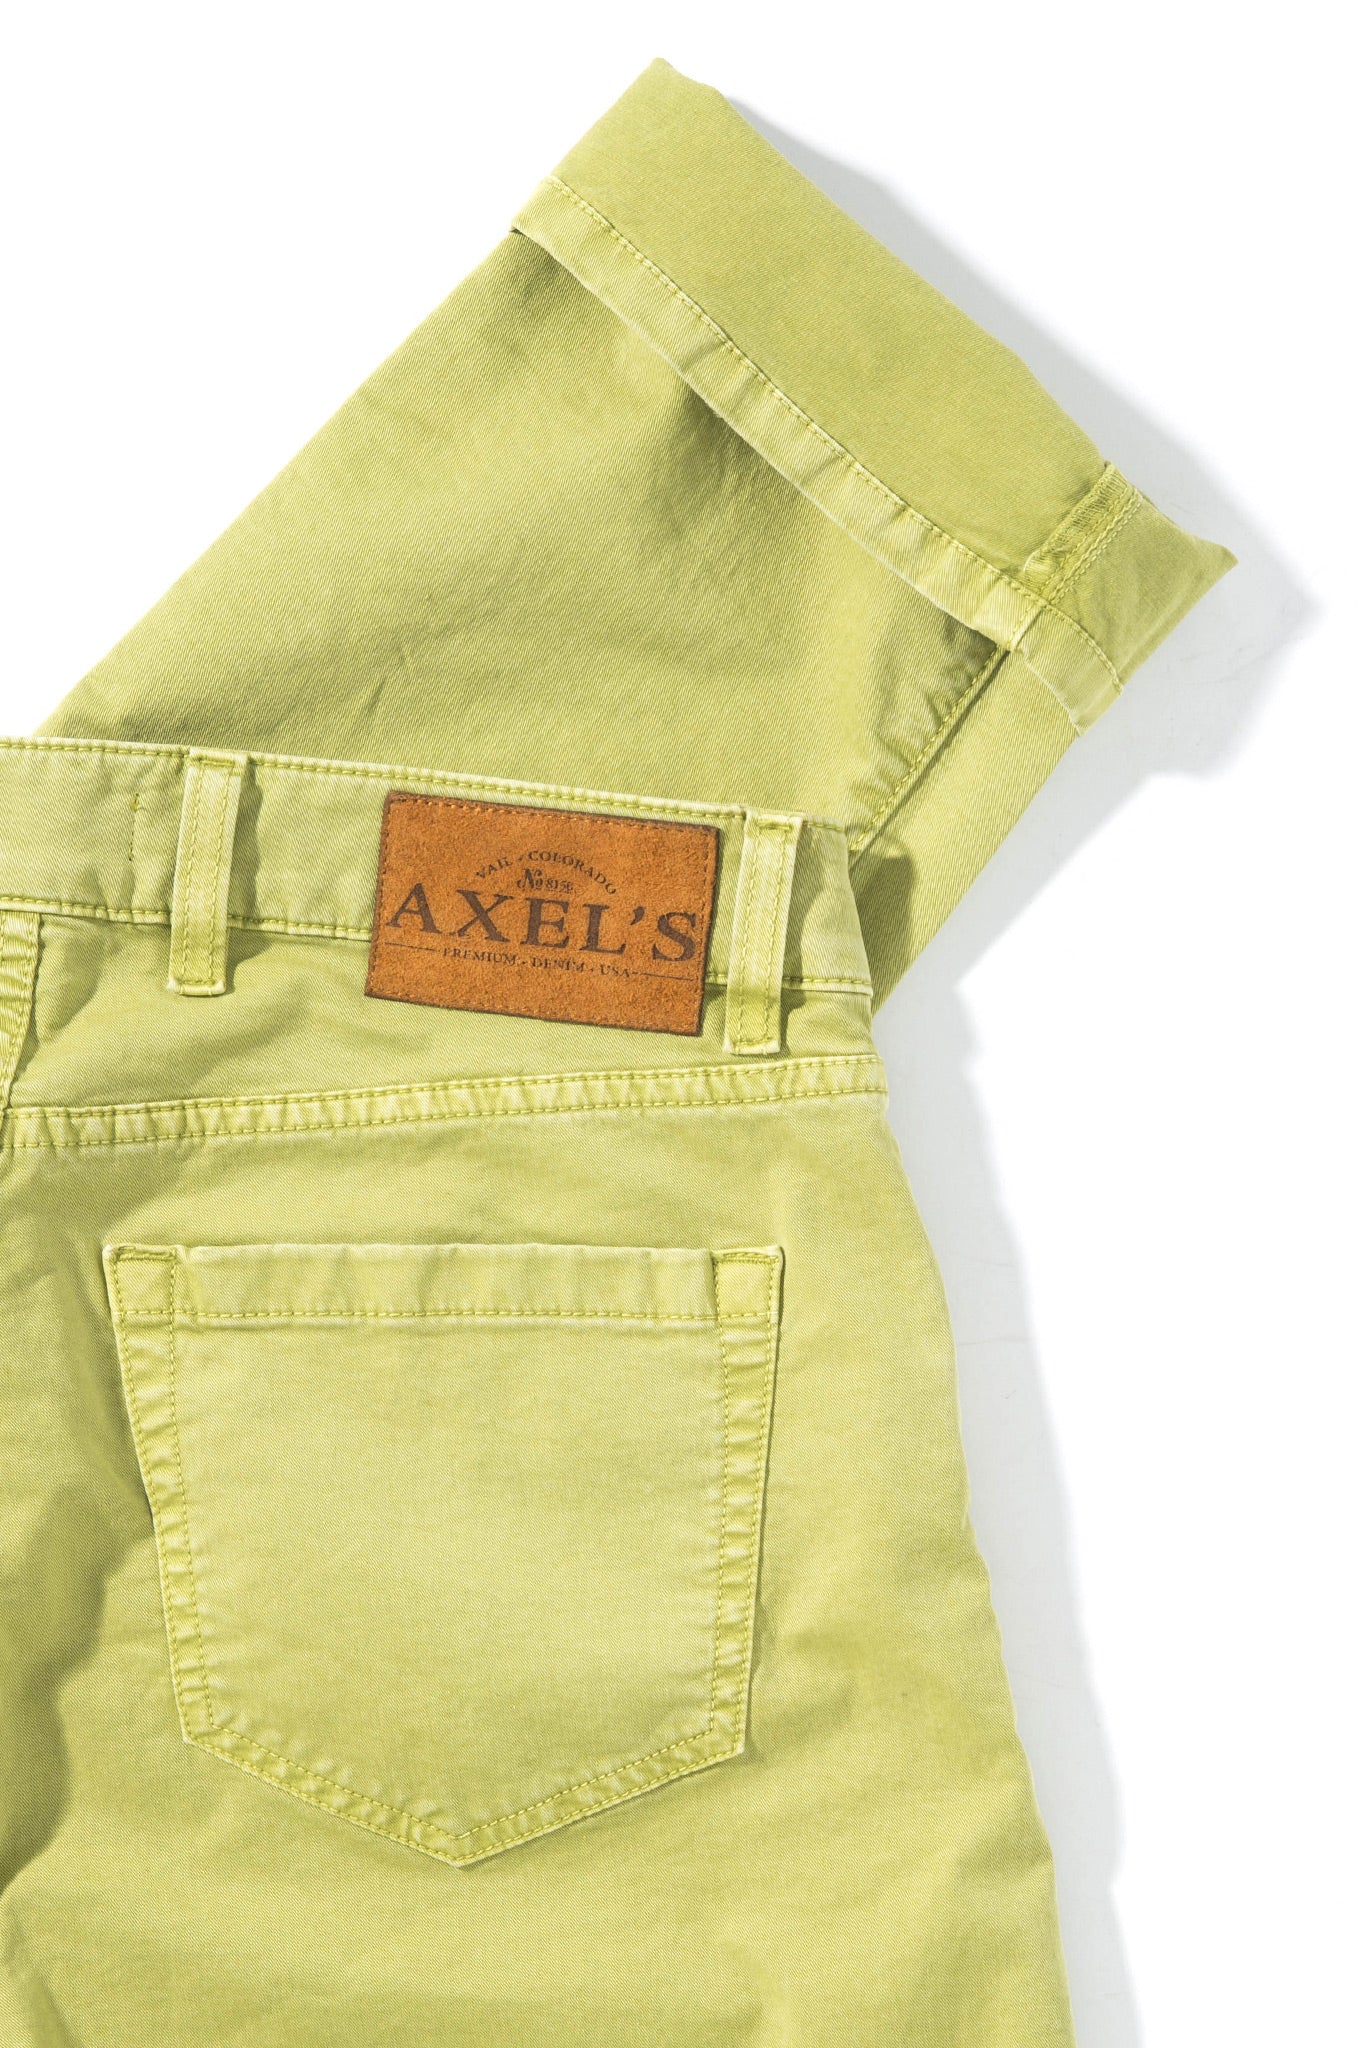 Flagstaff Stretch Cotton Twill in Lime | Mens - Pants - 5 Pocket | Axels Premium Denim